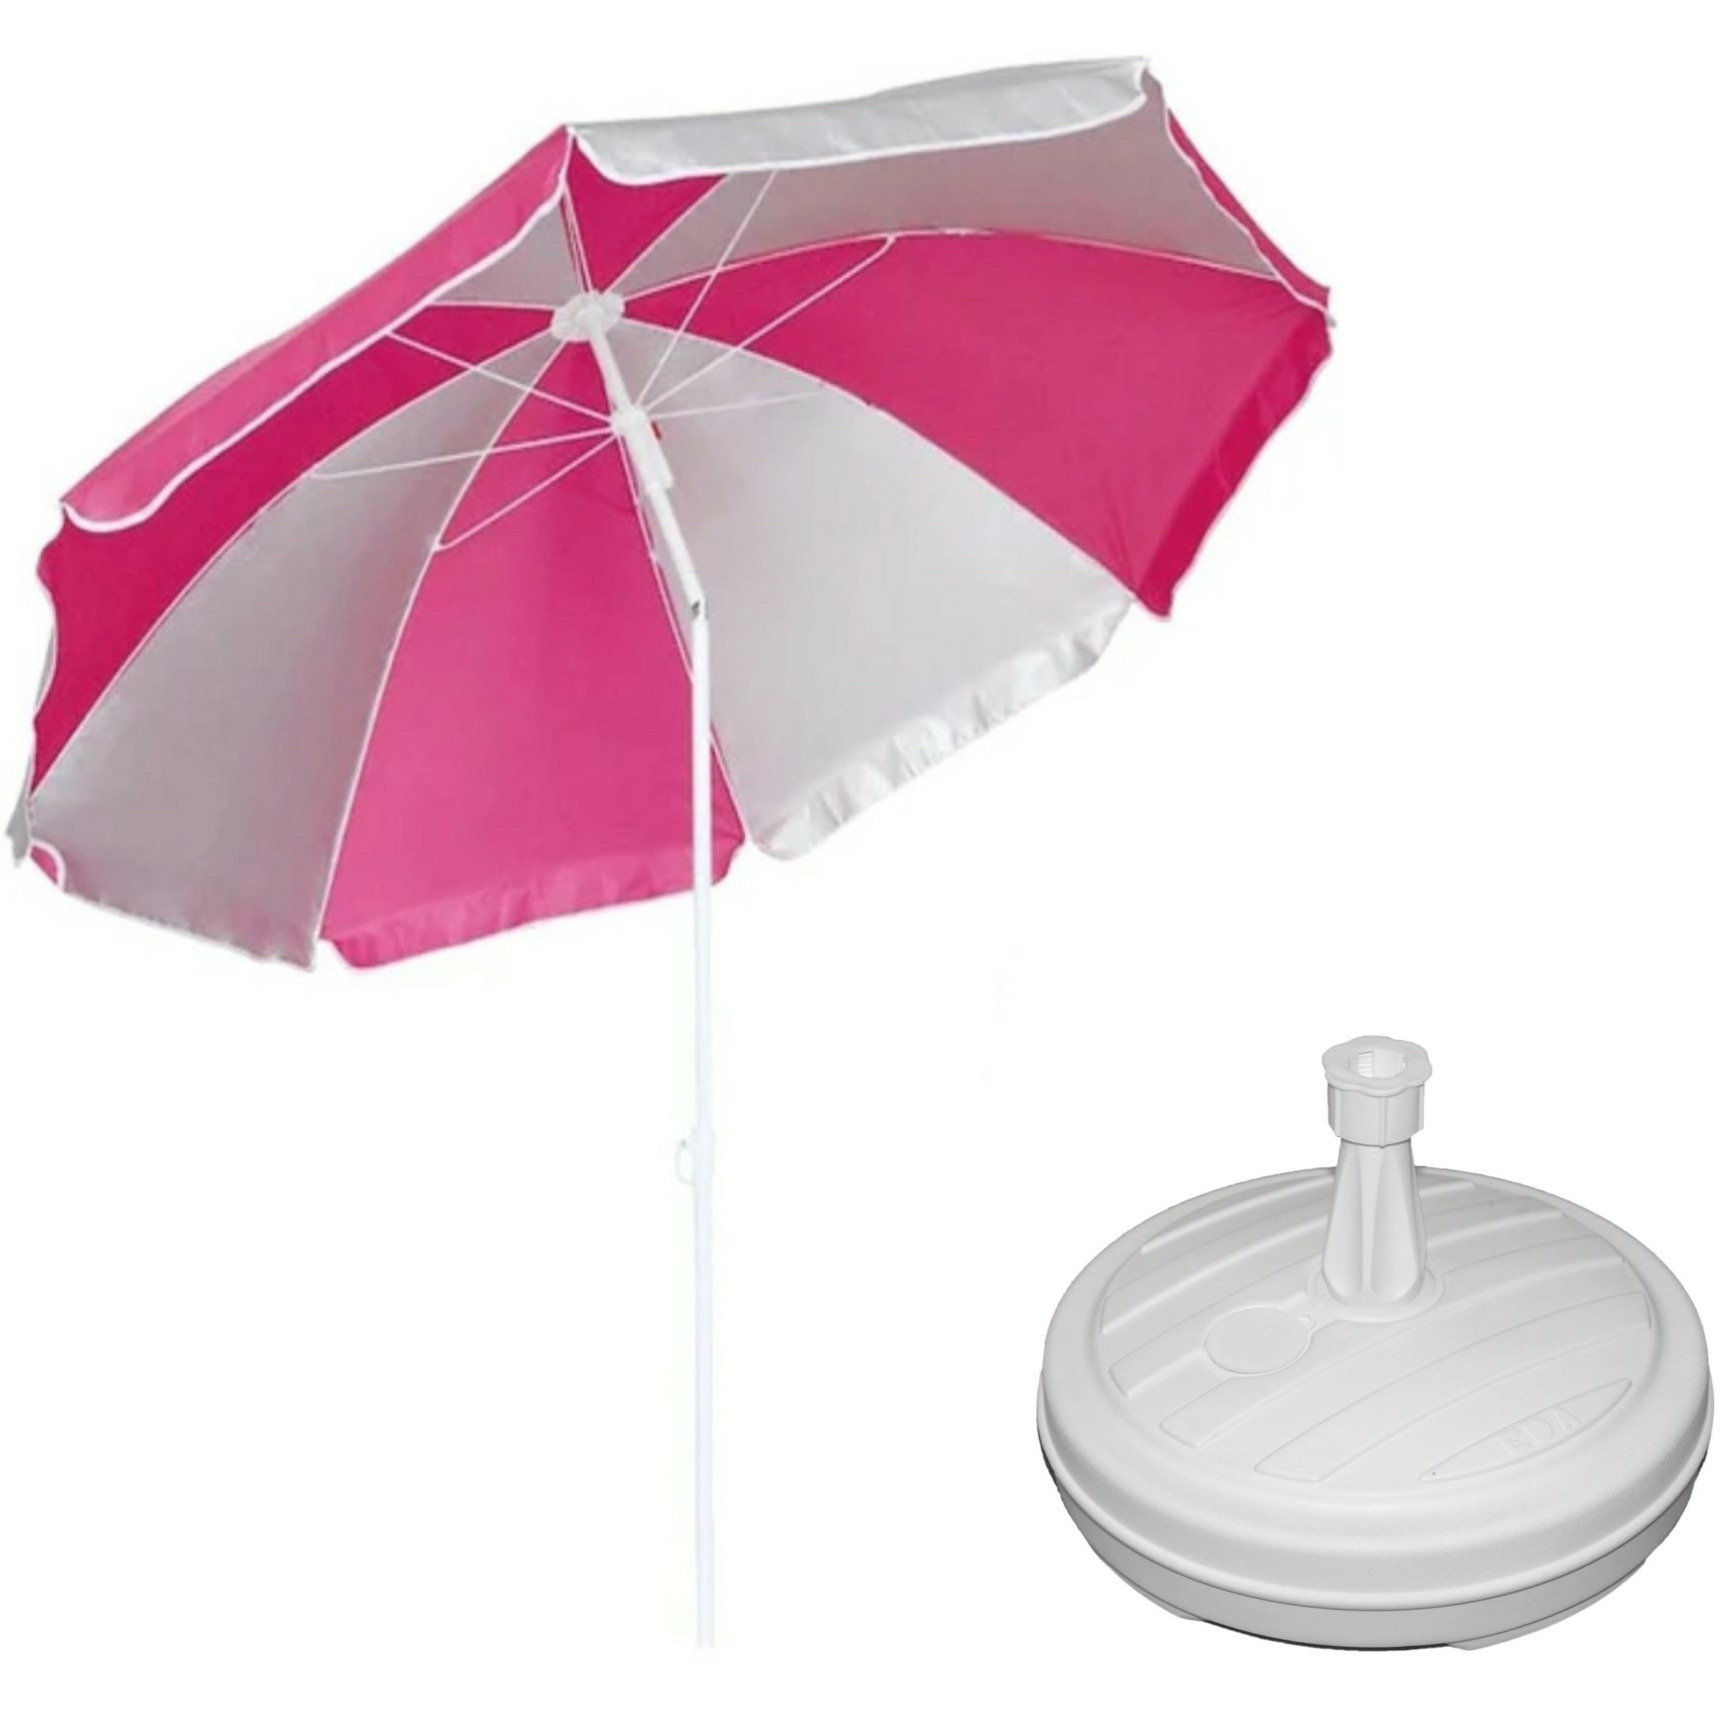 Merkloos Parasol - roze/wit - D120 cm - incl. draagtas - parasolvoet - cm -